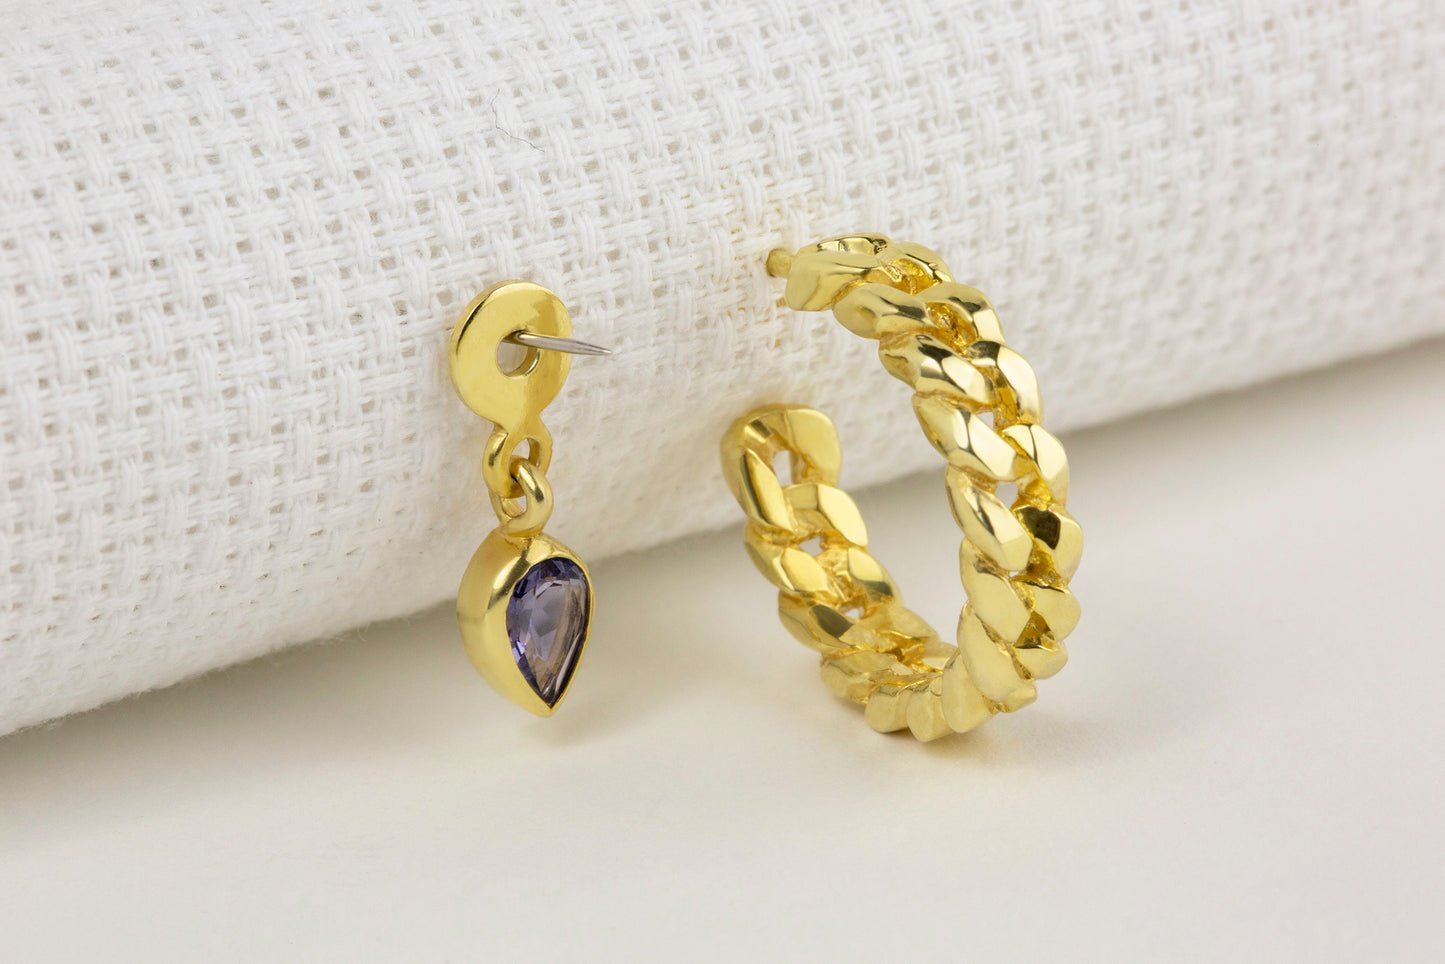 gold hoops earrings with iolite